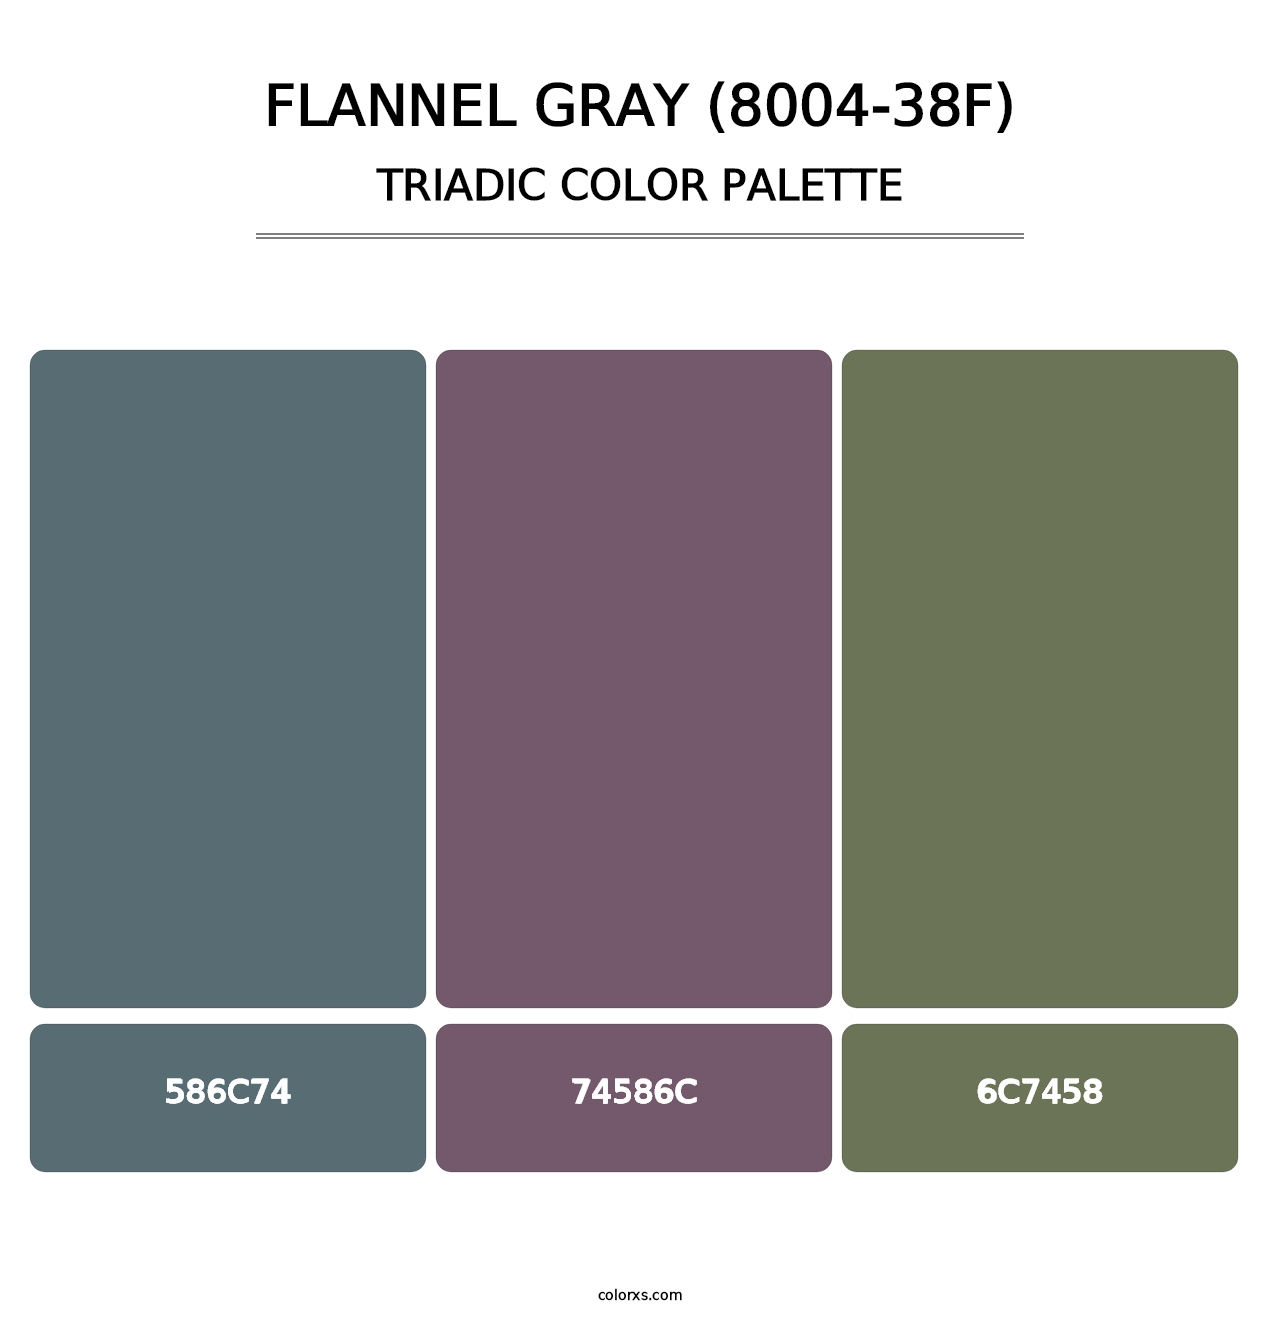 Flannel Gray (8004-38F) - Triadic Color Palette